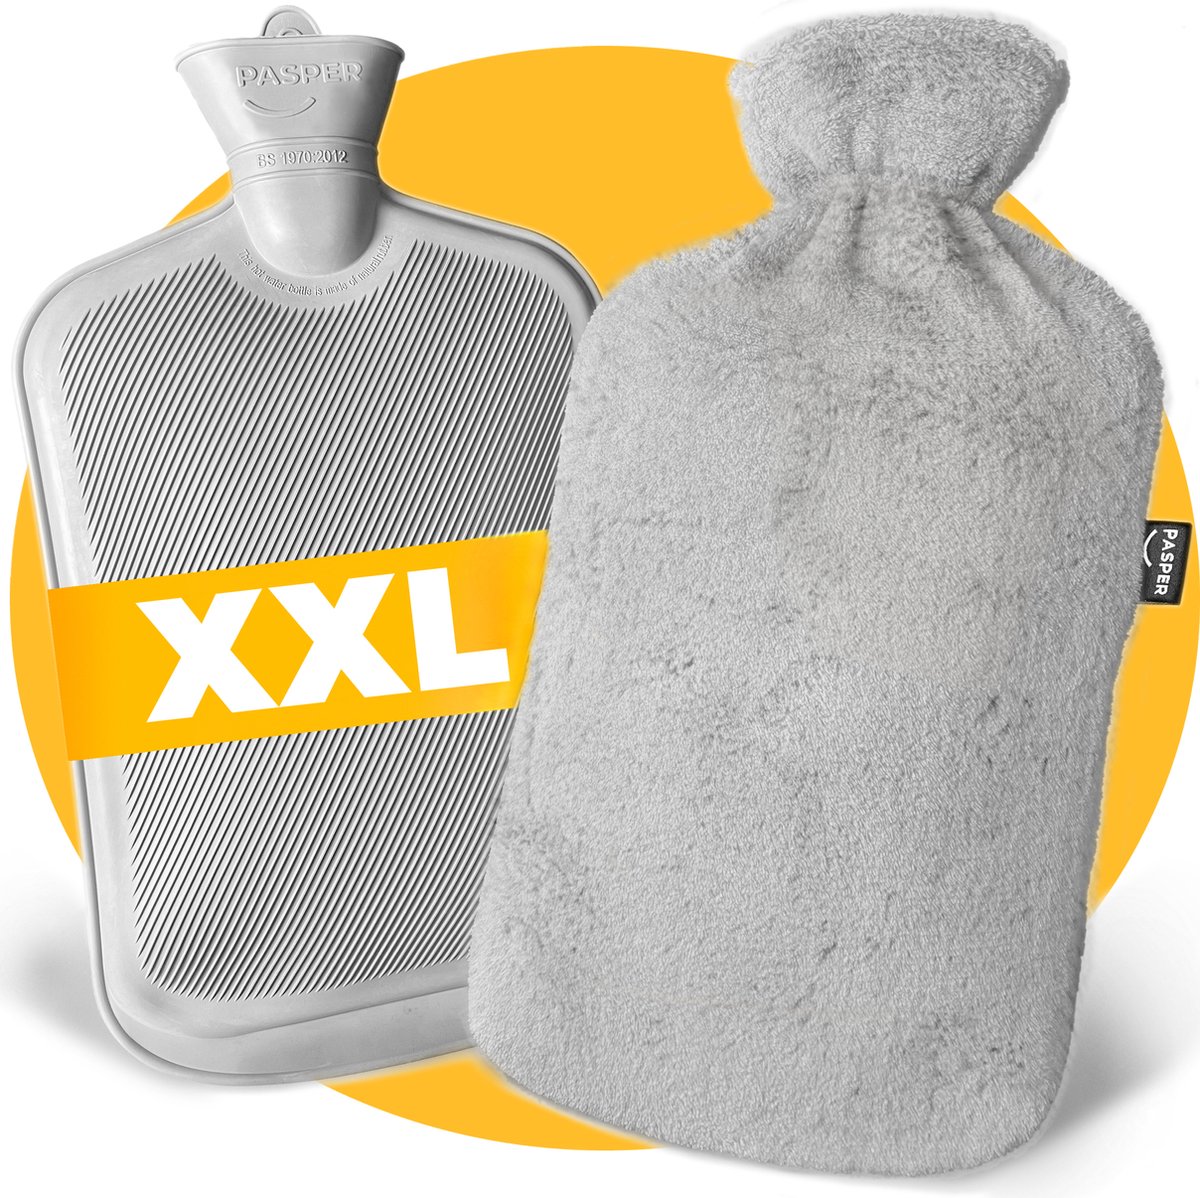 XXL kruik 3,5 liter met hoes - Pasper warmwaterkruik - 8 uur warmte - grijs - kruikzak
